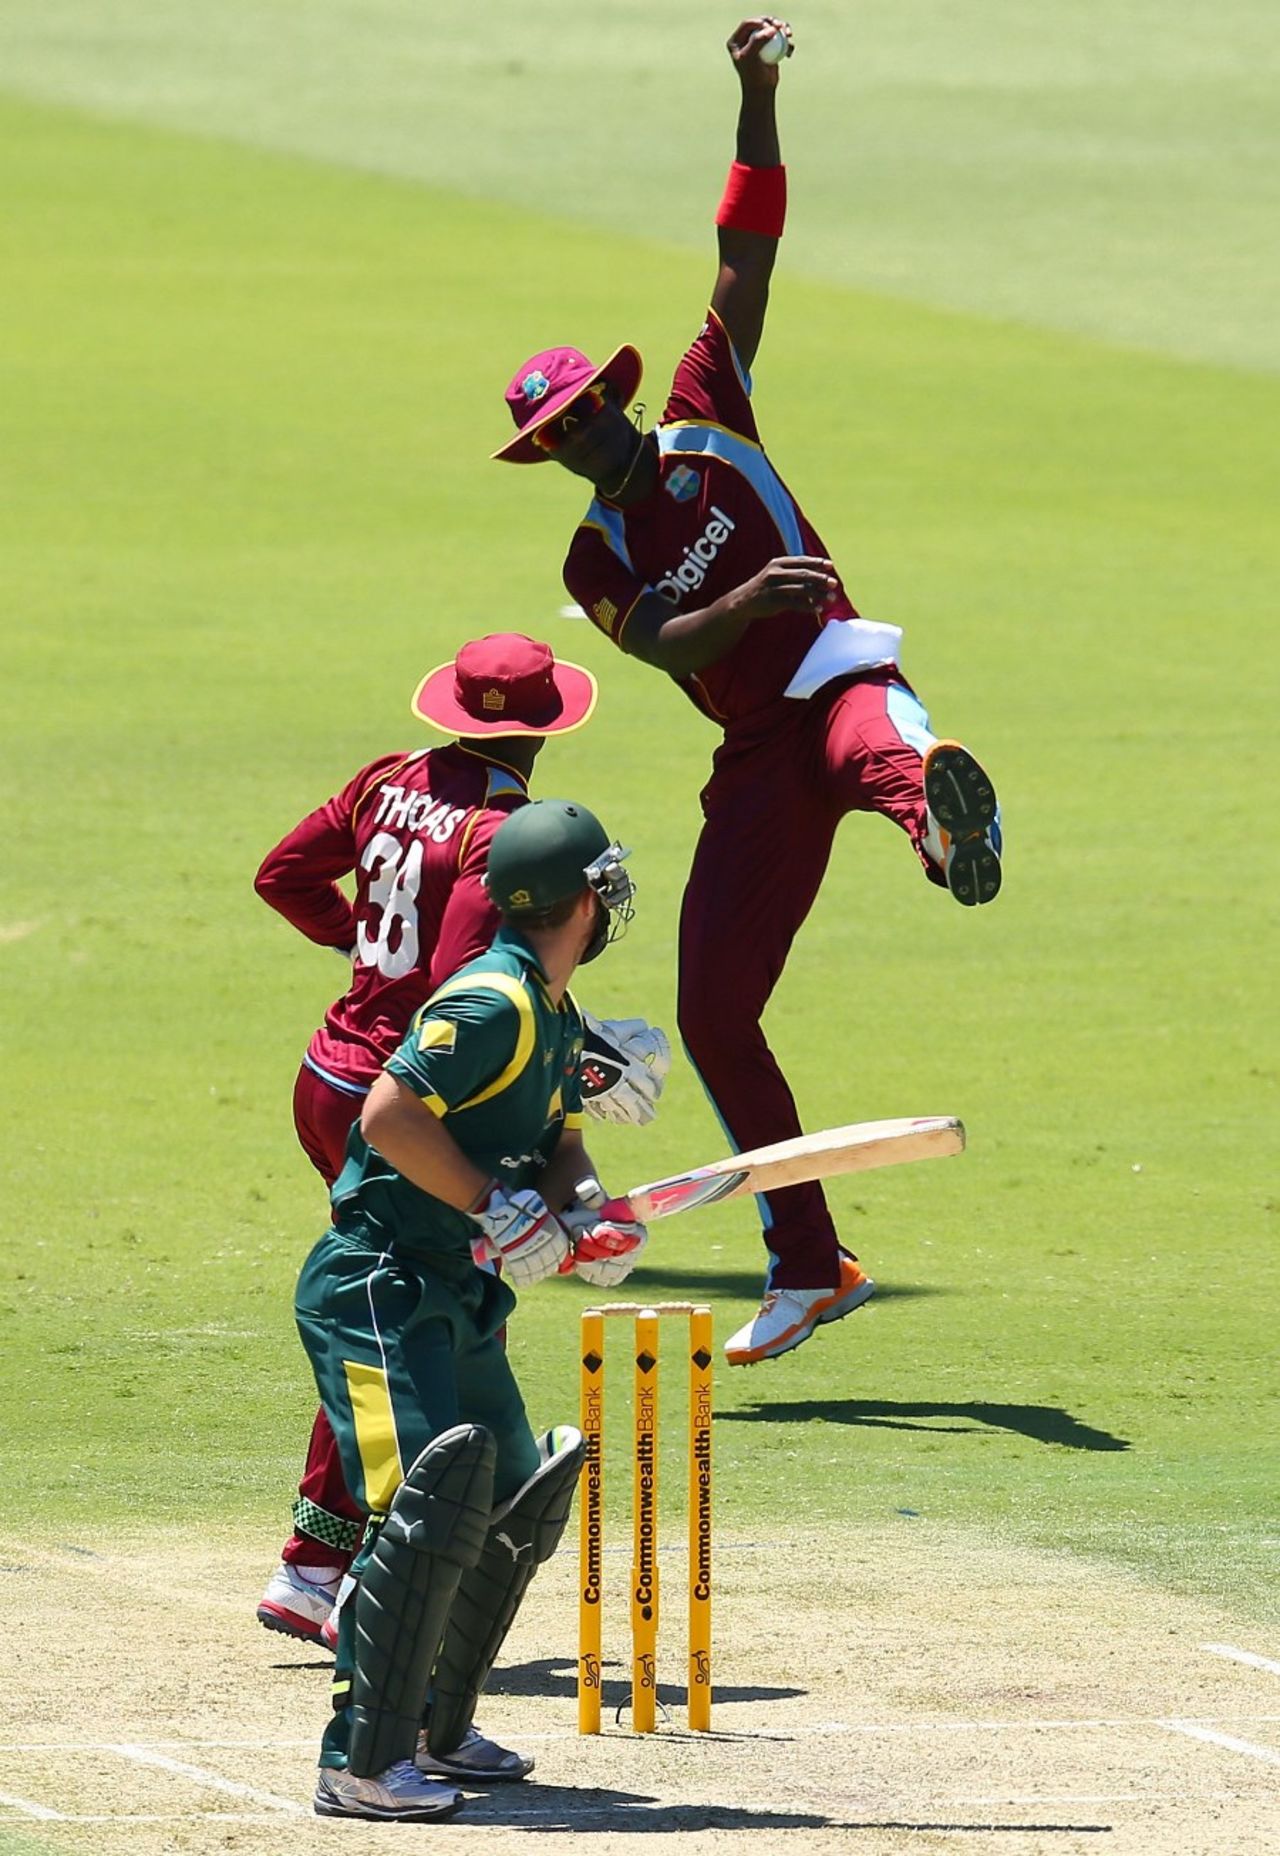 Darren Sammy takes a brilliant catch at slip, Australia v West Indies, 2nd ODI, Perth, February 3, 2013